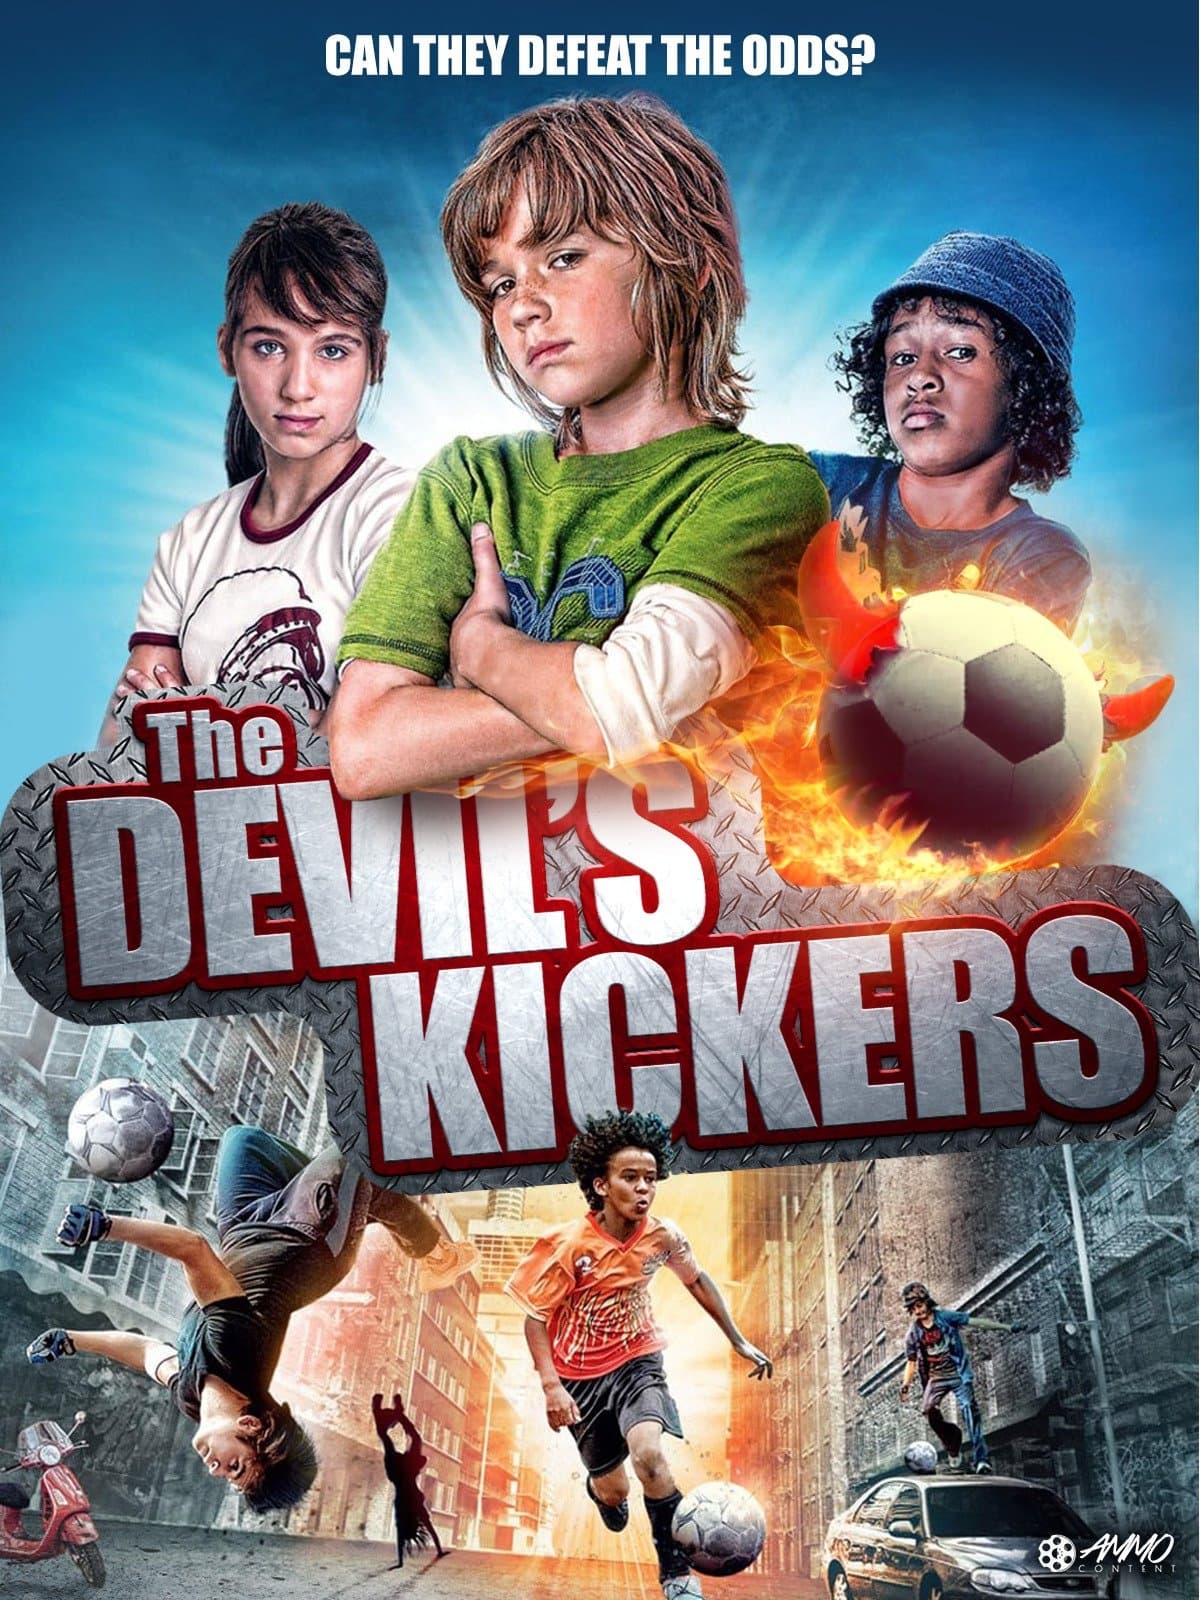 The Devil's Kickers